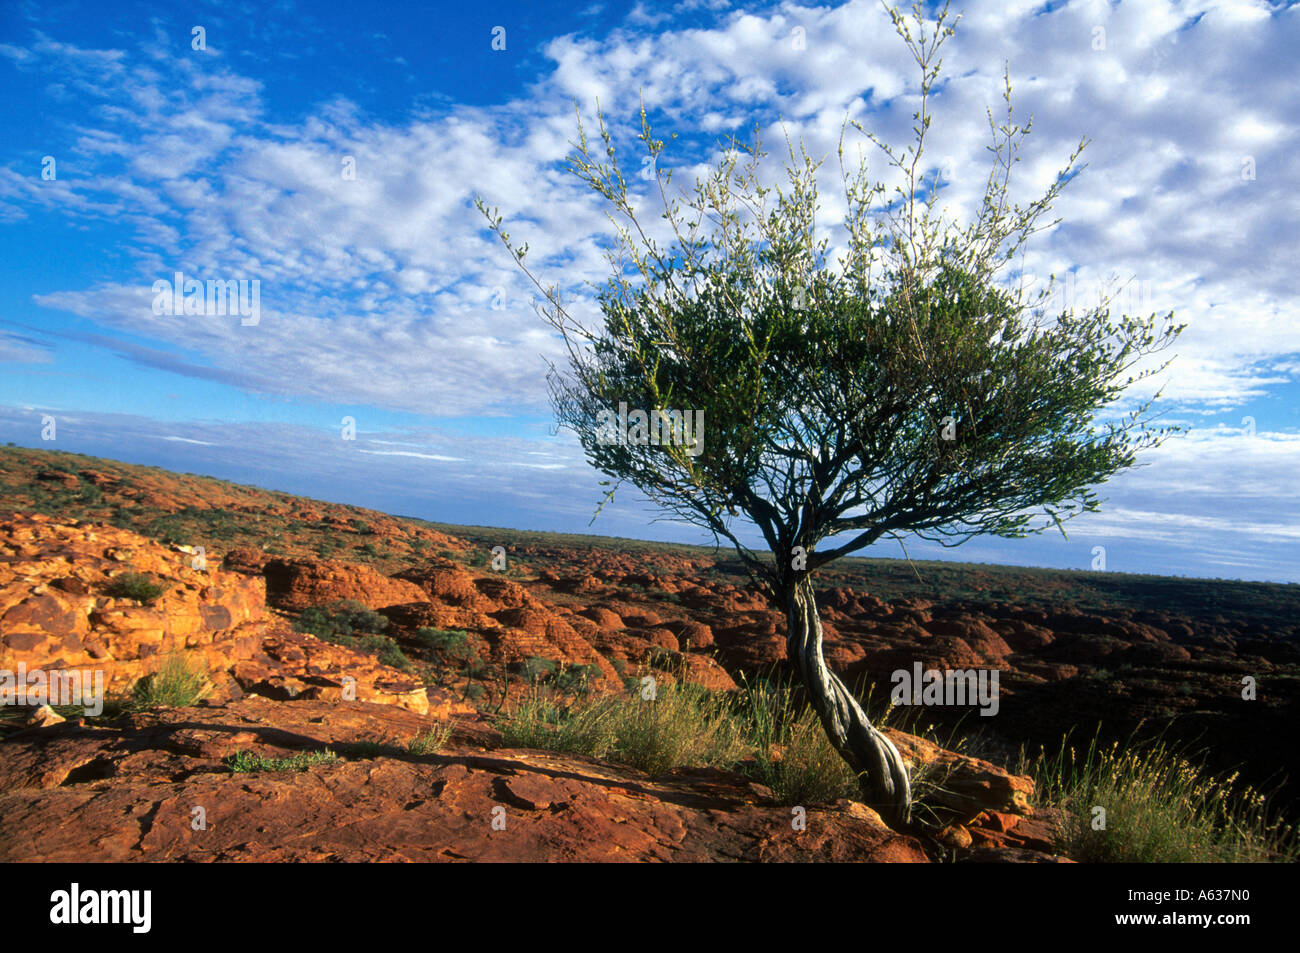 Baum auf Landschaft, Kings Canyon, George Gill Range, Watarrka National Park, Northern Territory, Australien Stockfoto